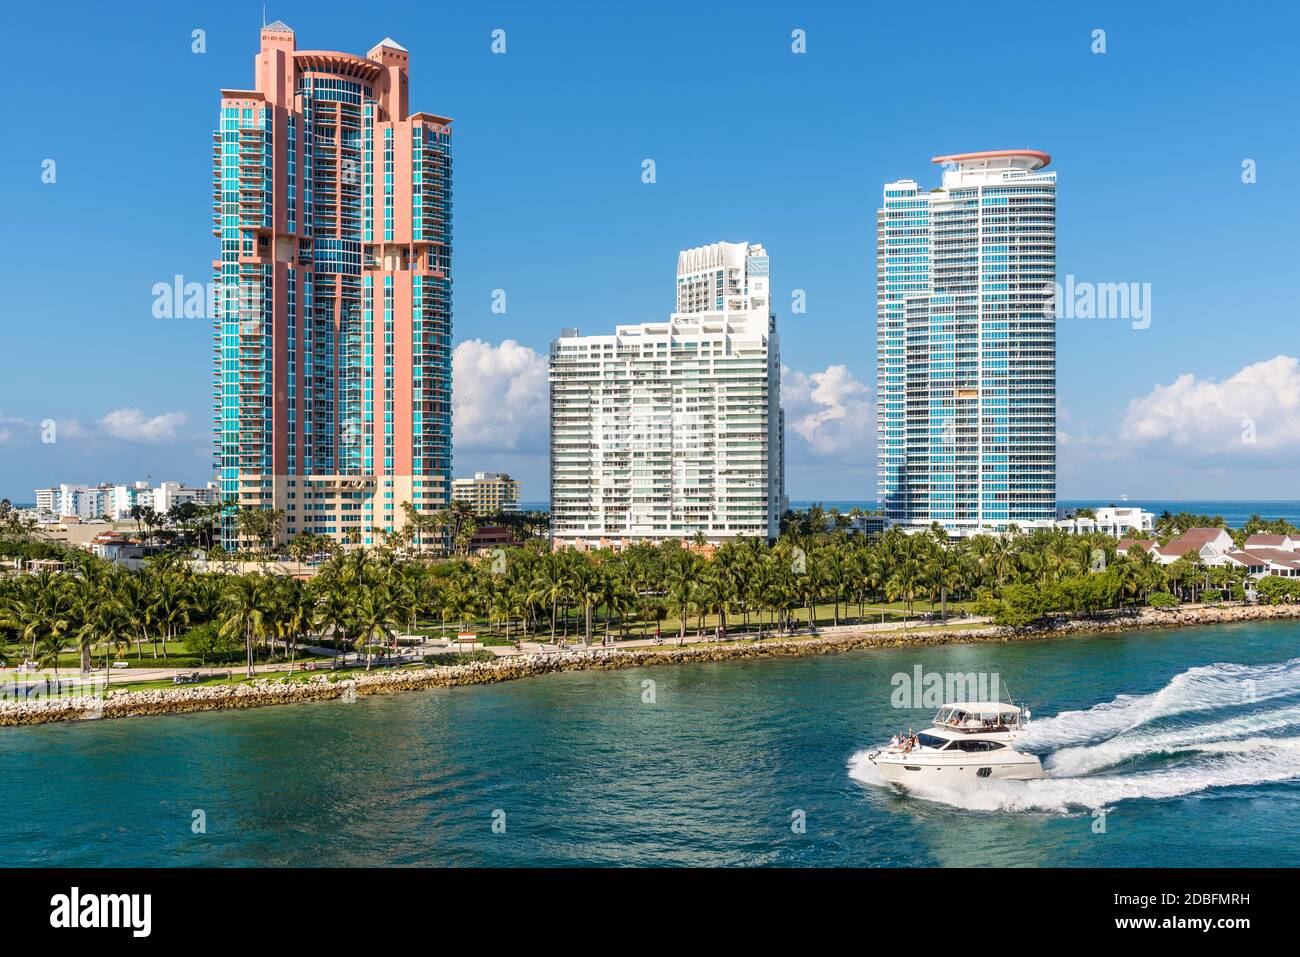 Miami, FL, United States - April 28, 2019: Luxury high-rise condominiums on the Florida Intra-Coastal Waterway in Miami Beach, Florida, USA. The South Stock Photo